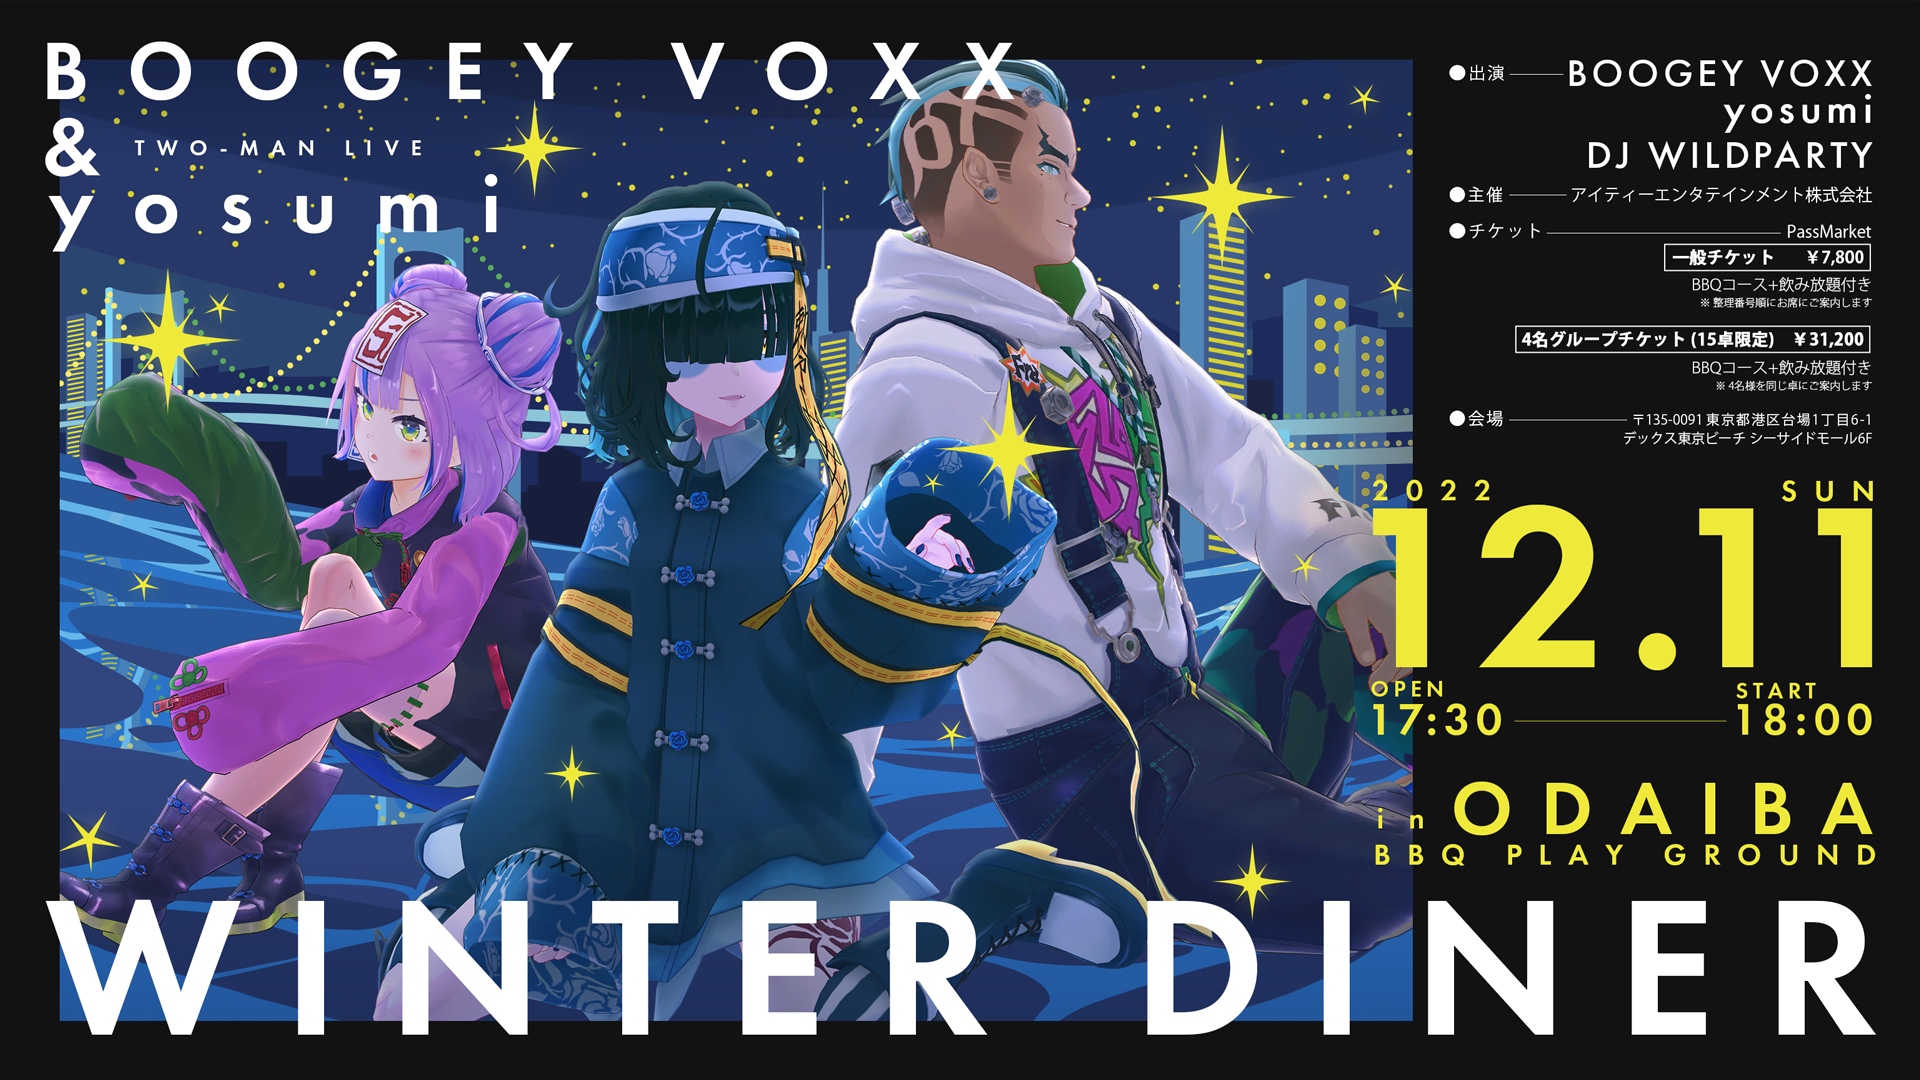 BOOGEY VOXX × yosumi ツーマンライブの開催が決定！